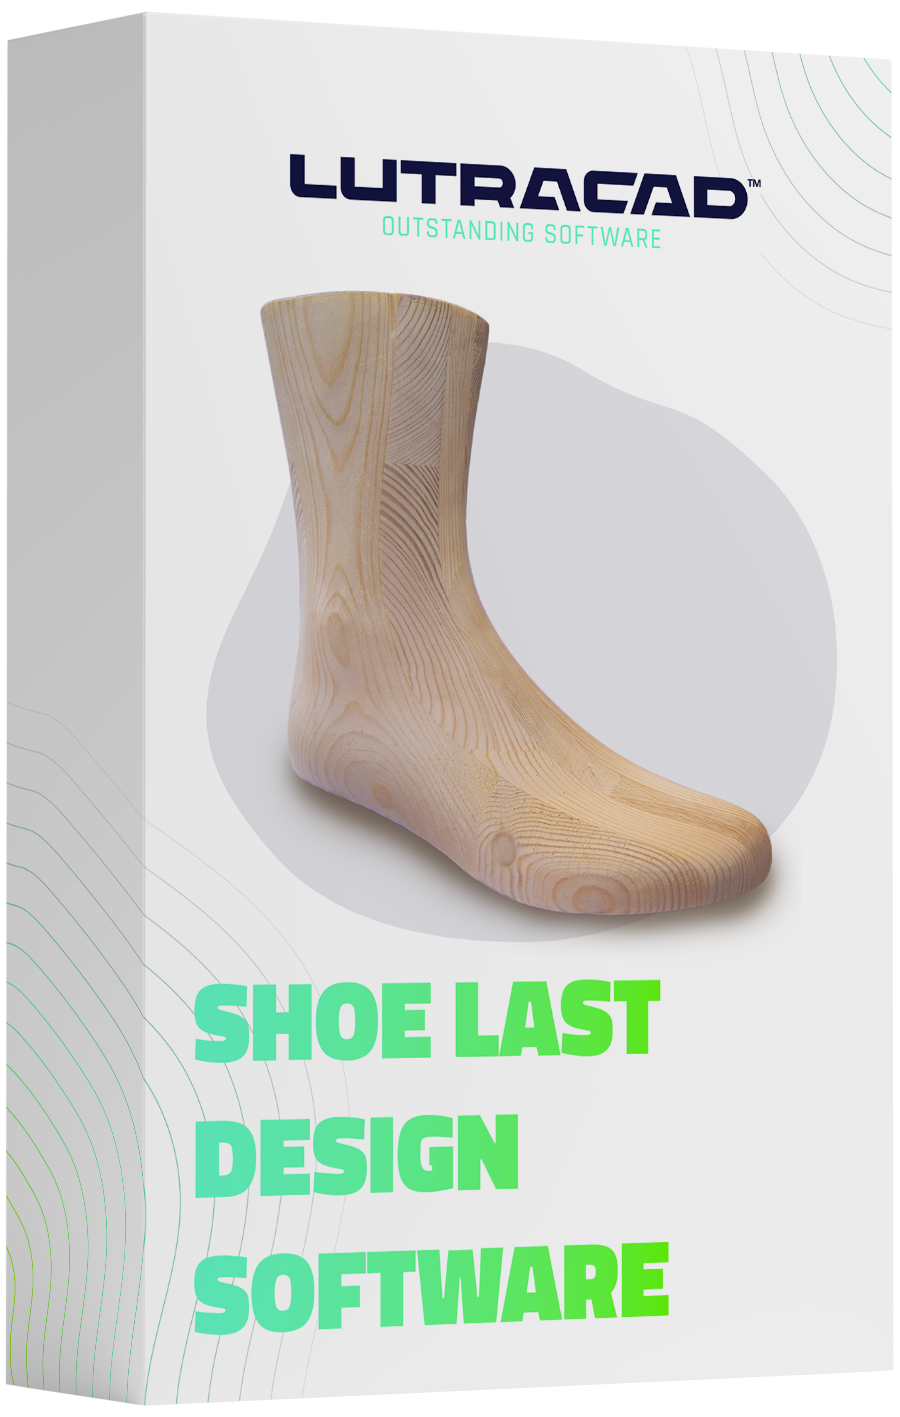 Shoe last design software